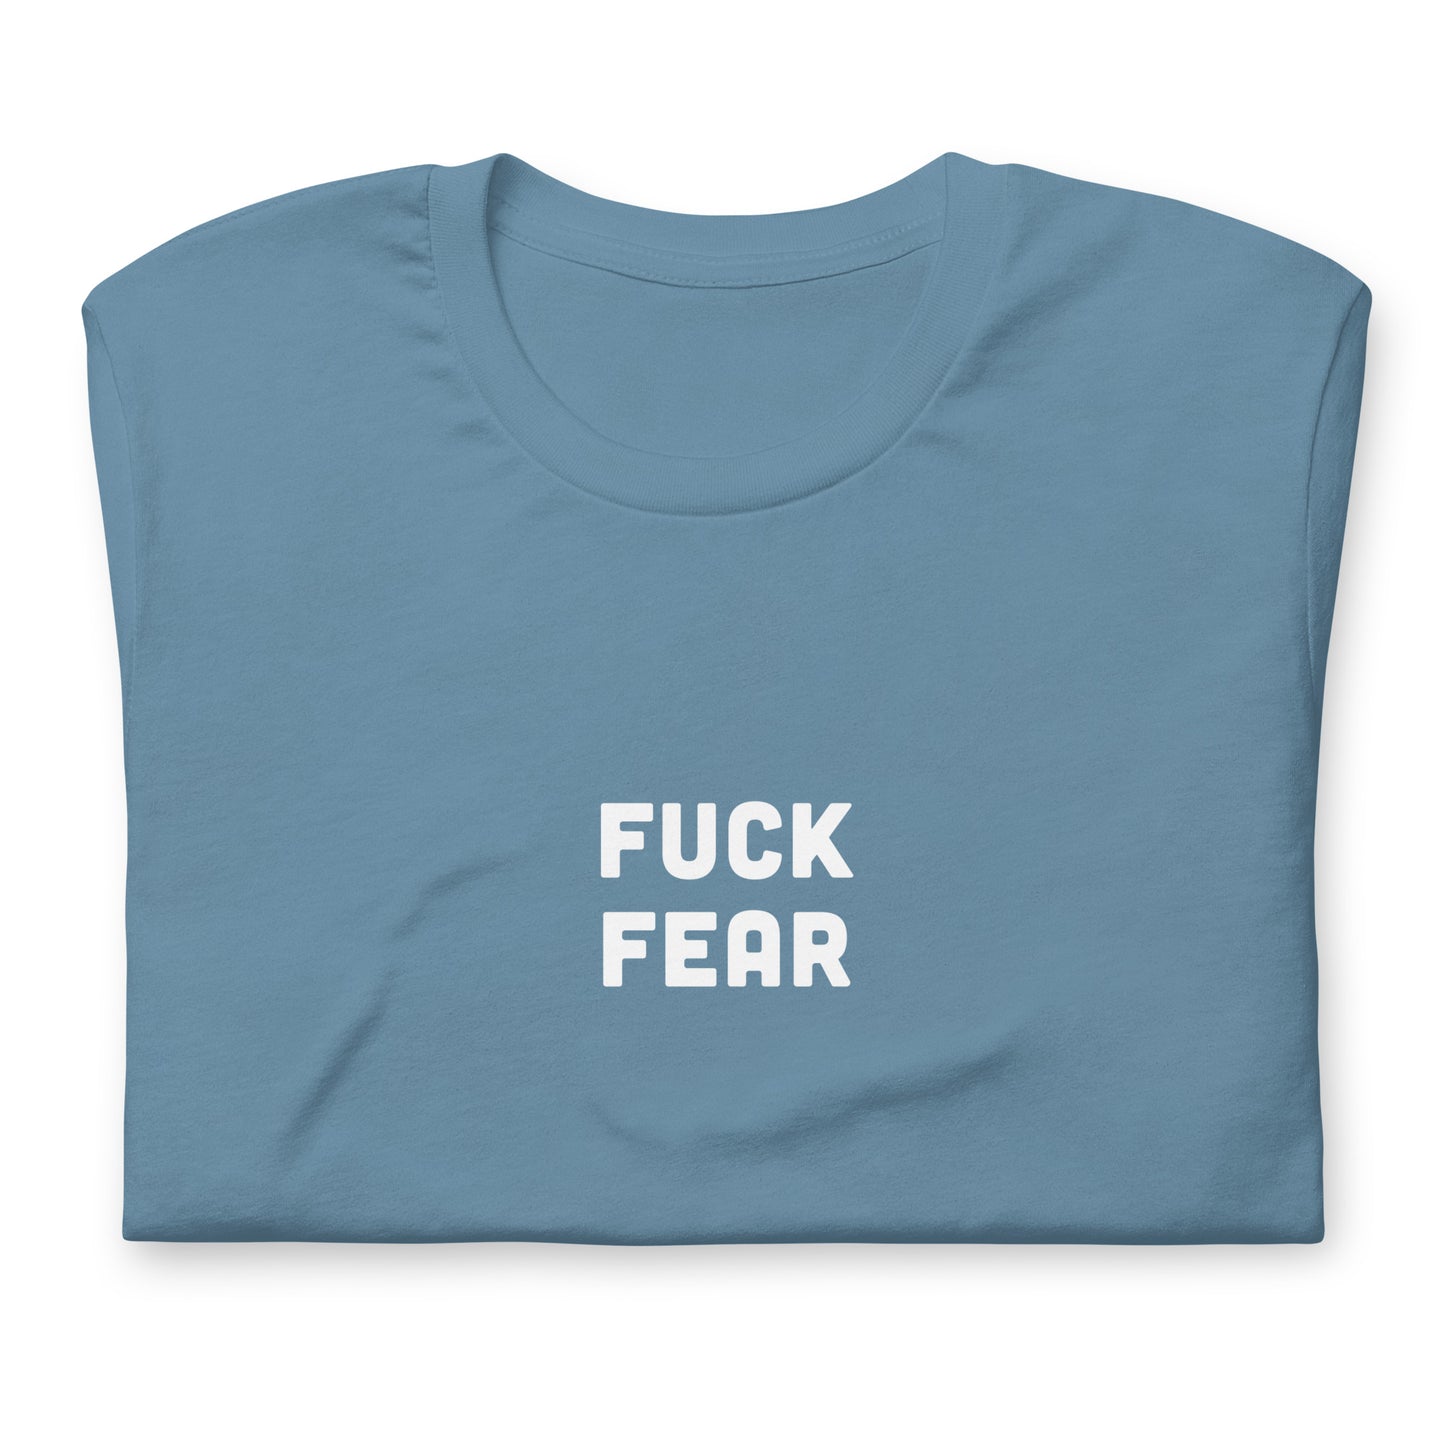 Fuck Fear T-Shirt Size M Color Forest